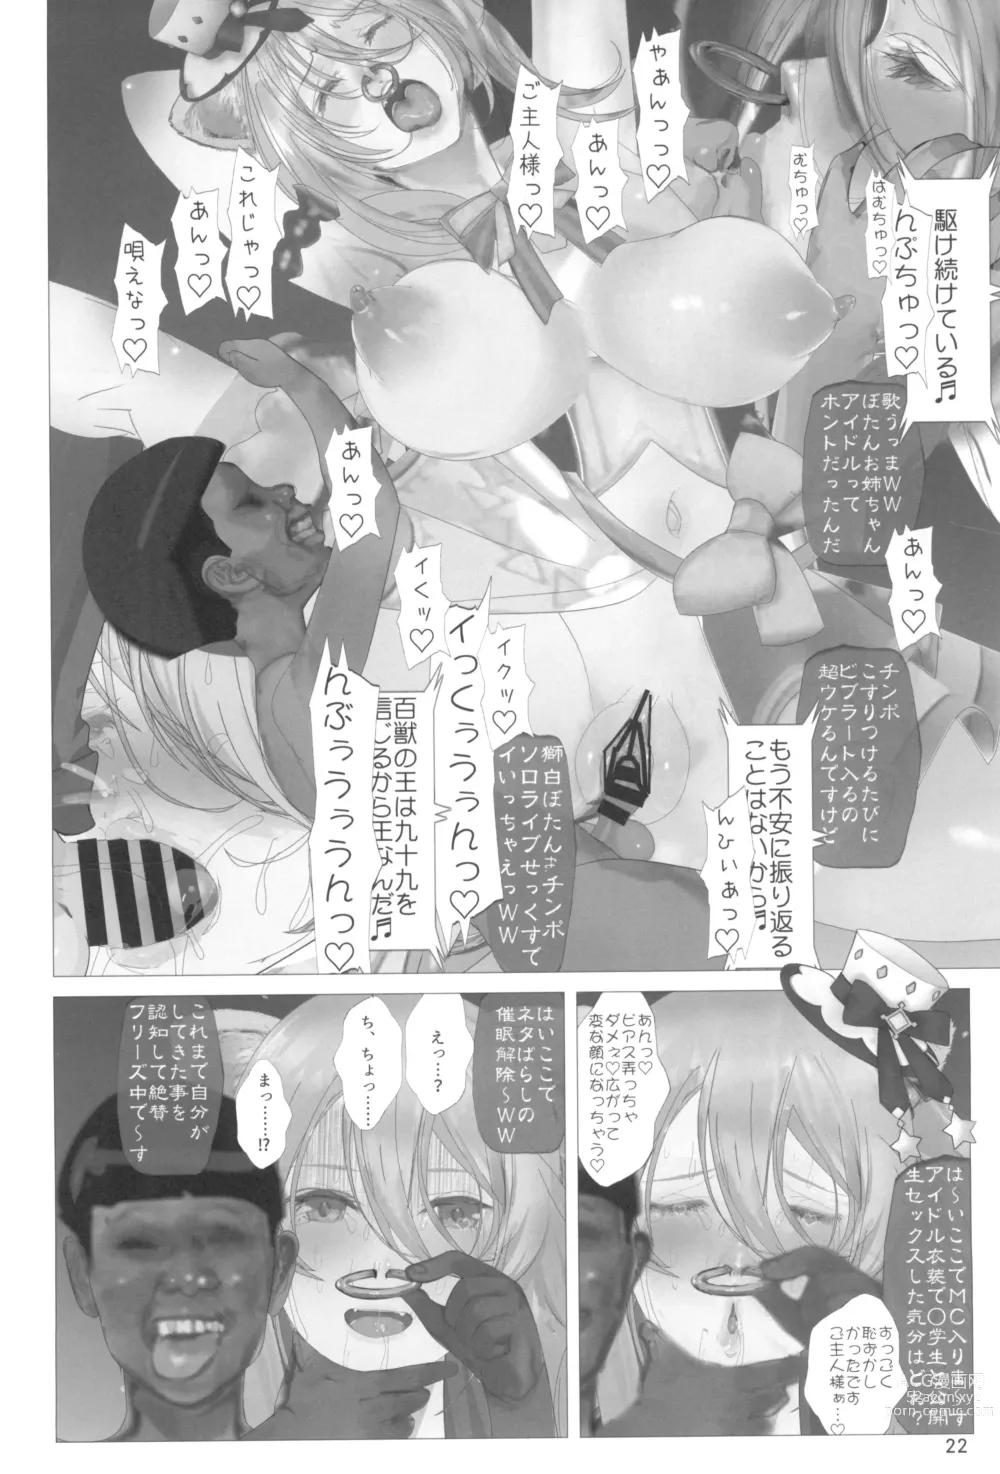 Page 22 of doujinshi Isaimemin Shishiron VS Kusokugaki